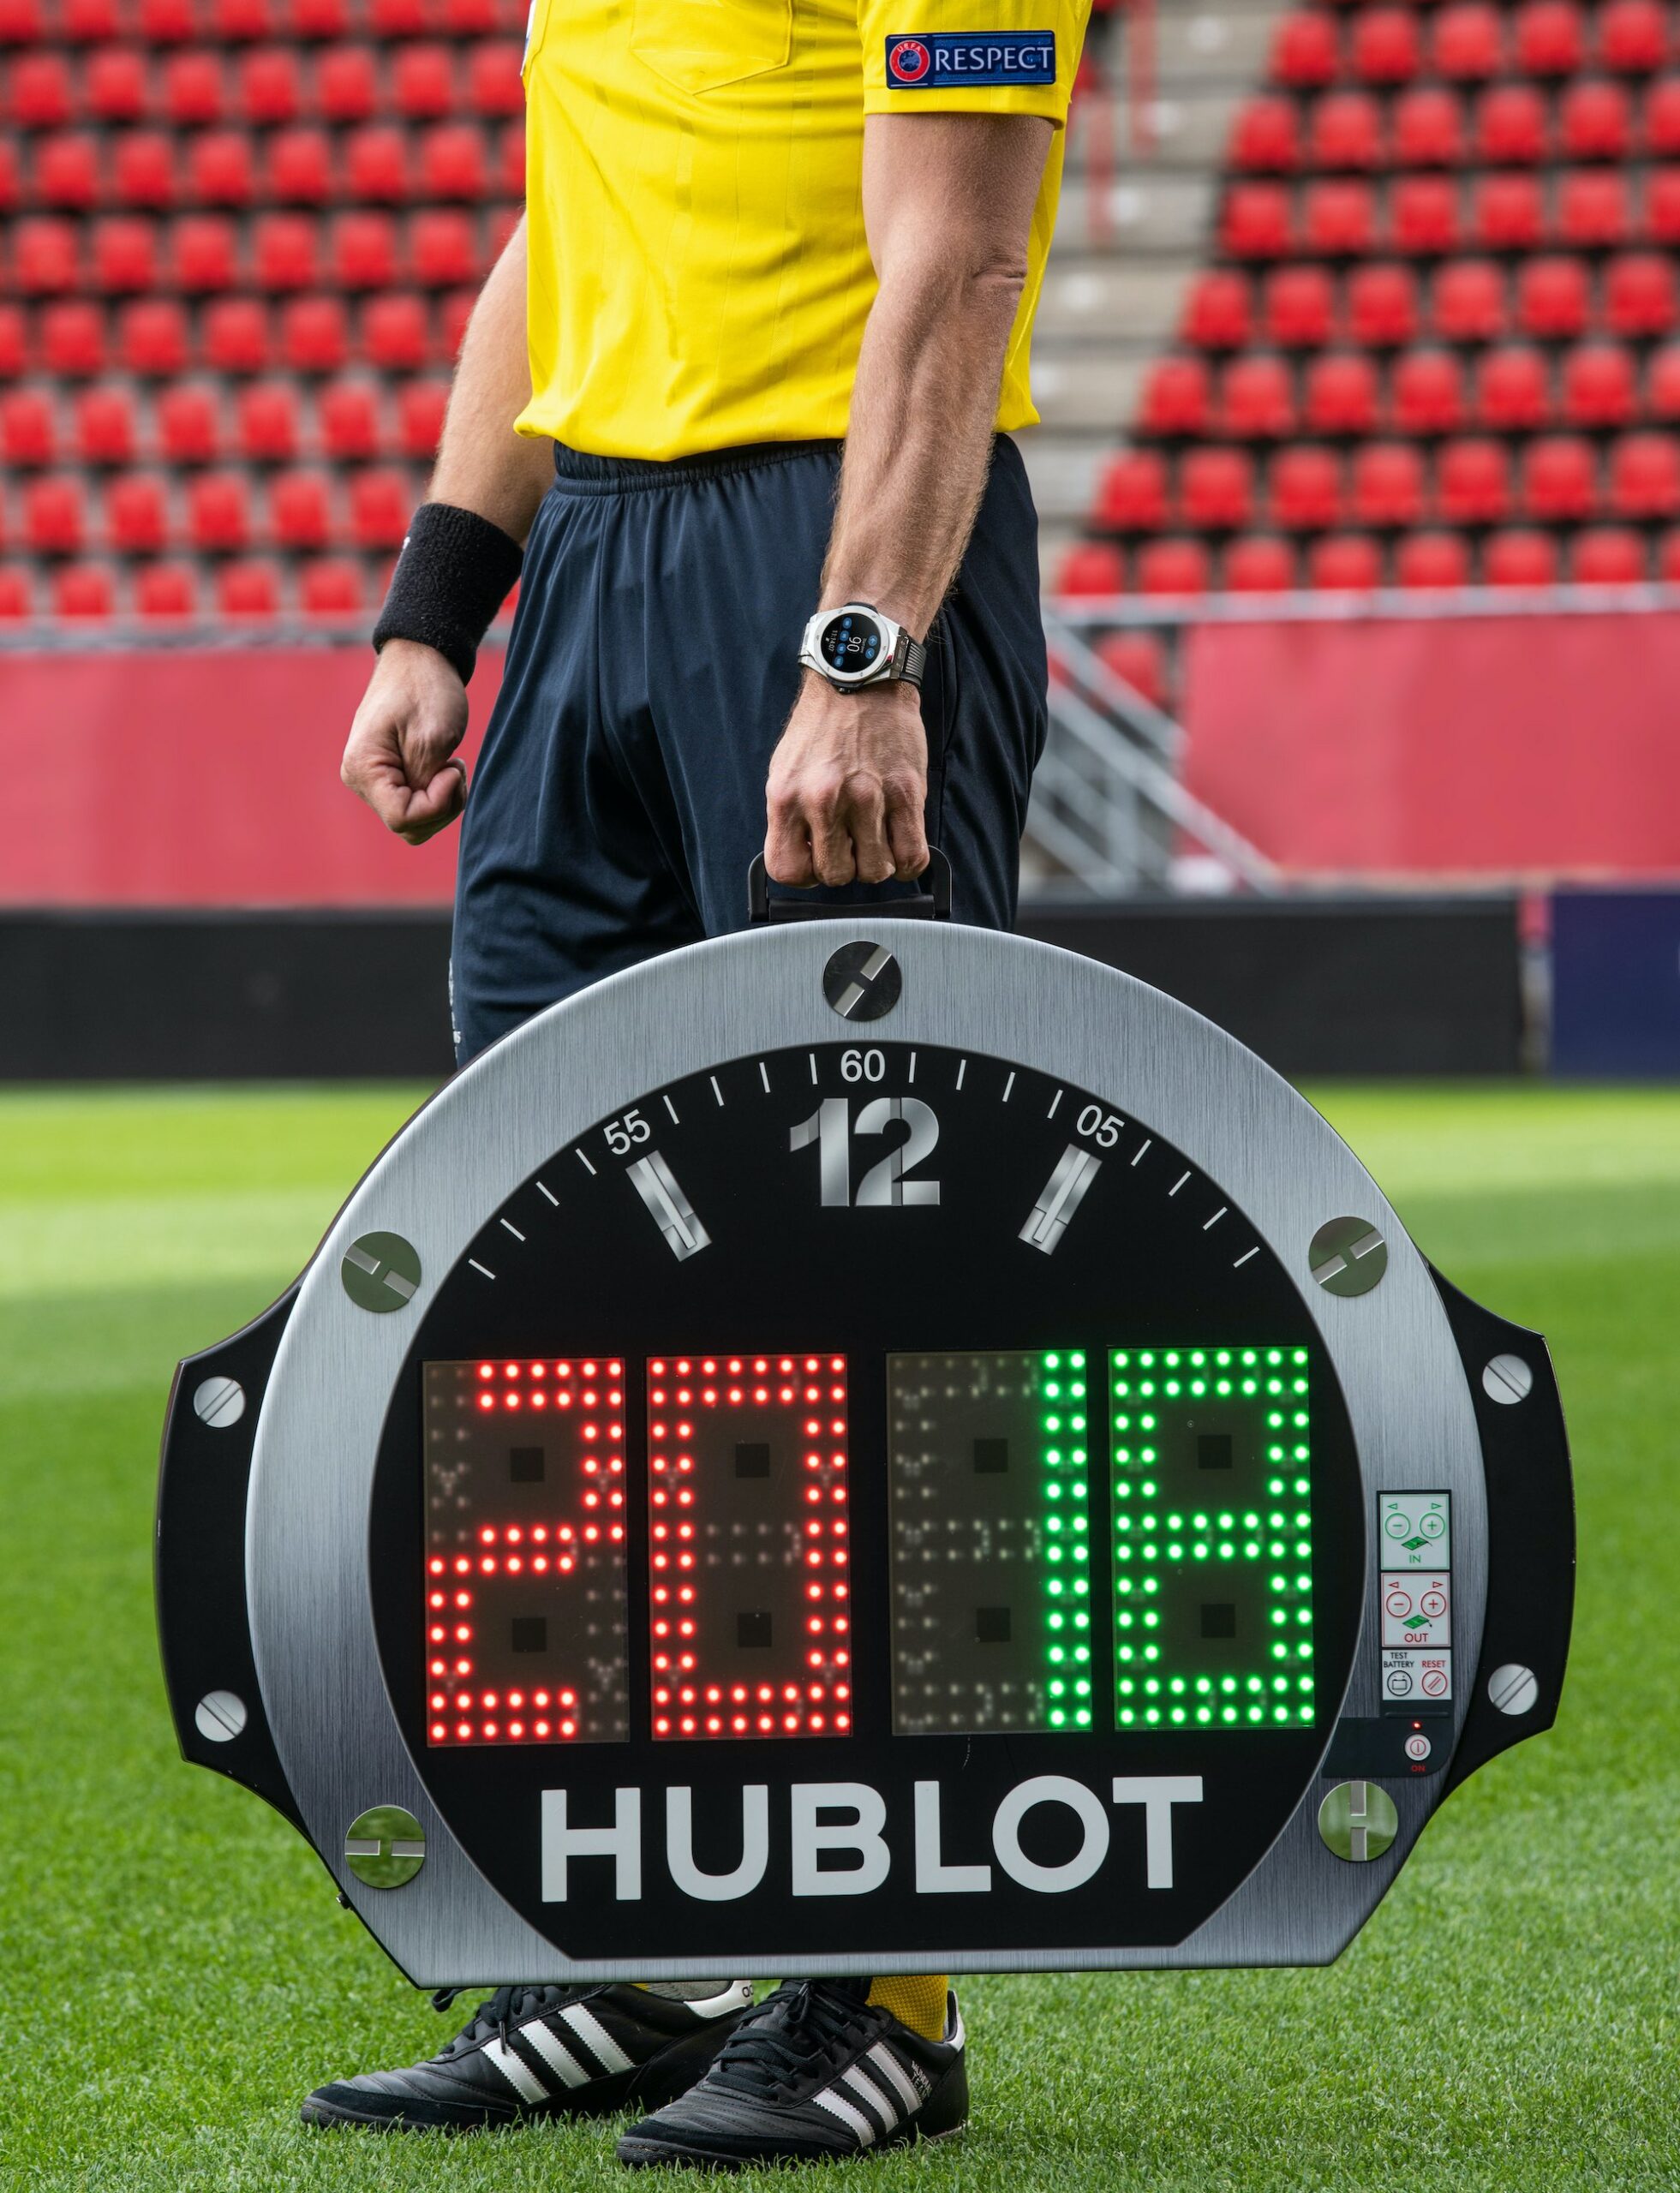 Hublot E FIFA World Cup Qatar 2022 Watch | aBlogtoWatch